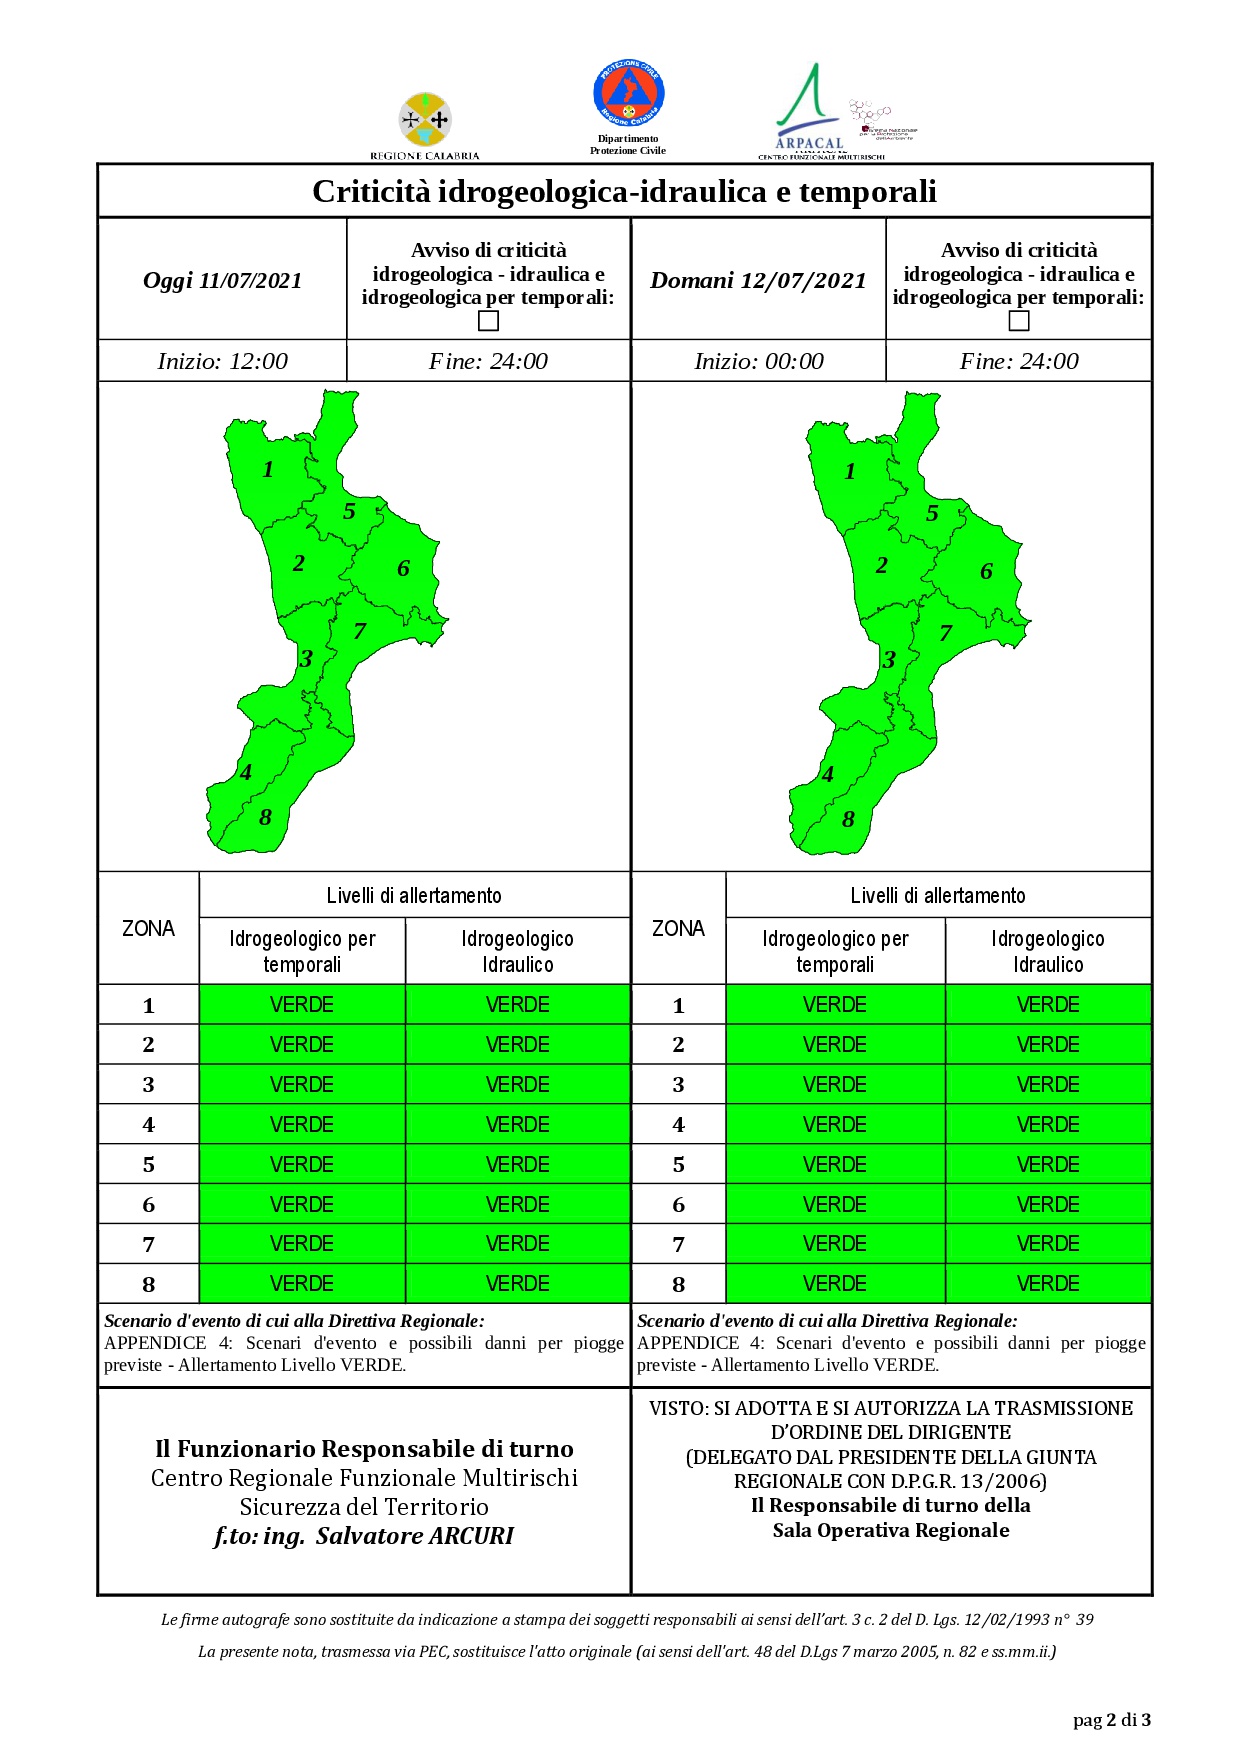 Criticità idrogeologica-idraulica e temporali in Calabria 11-07-2021